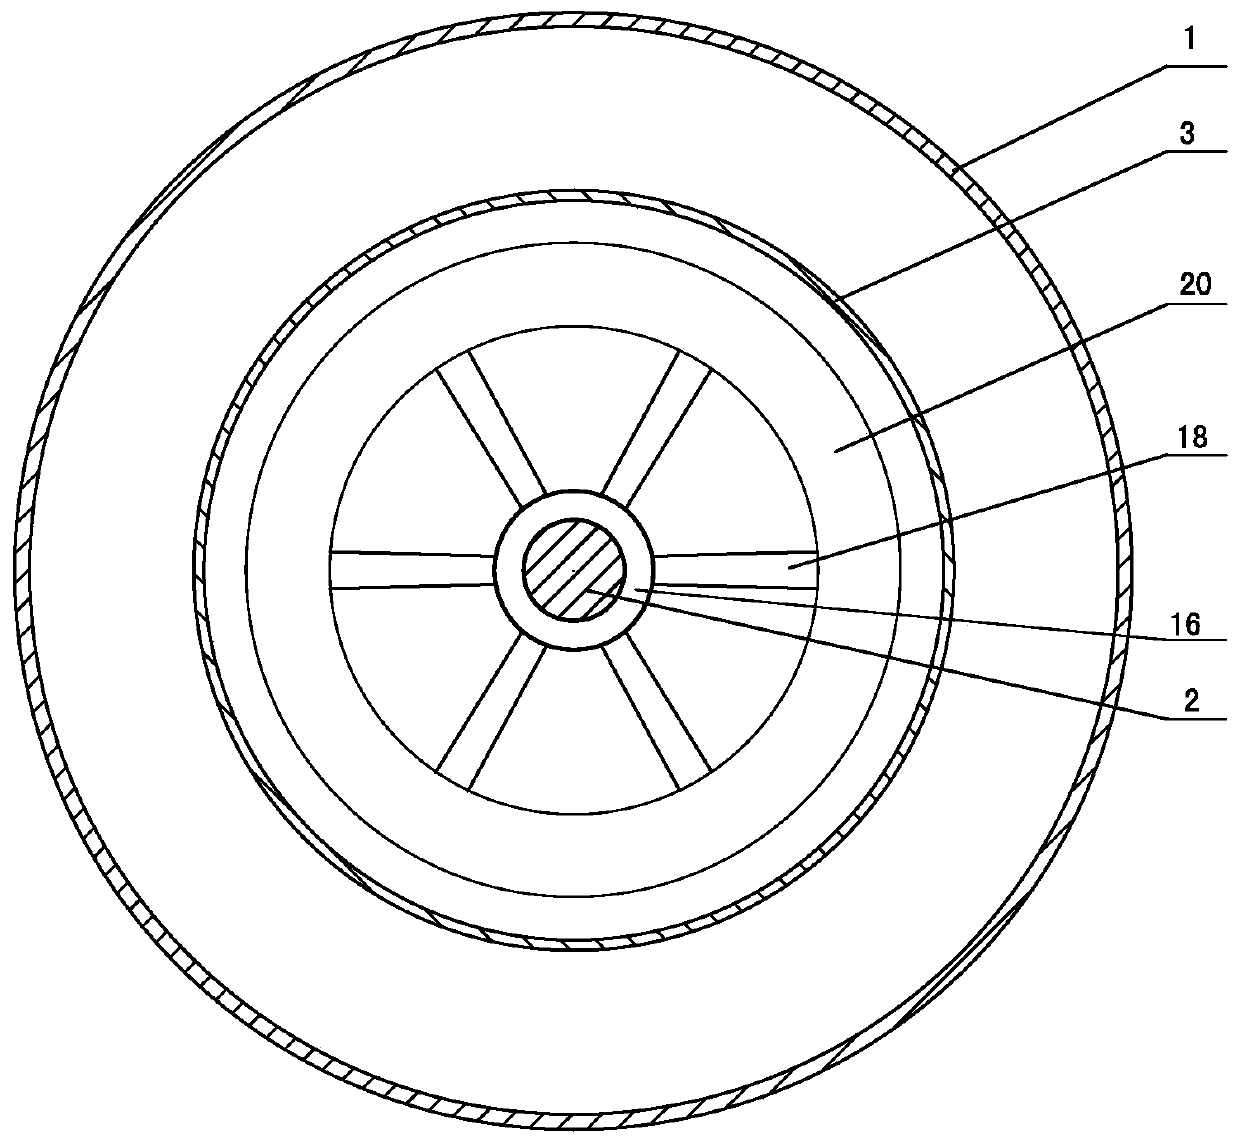 A hub motor drive wheel with braking device